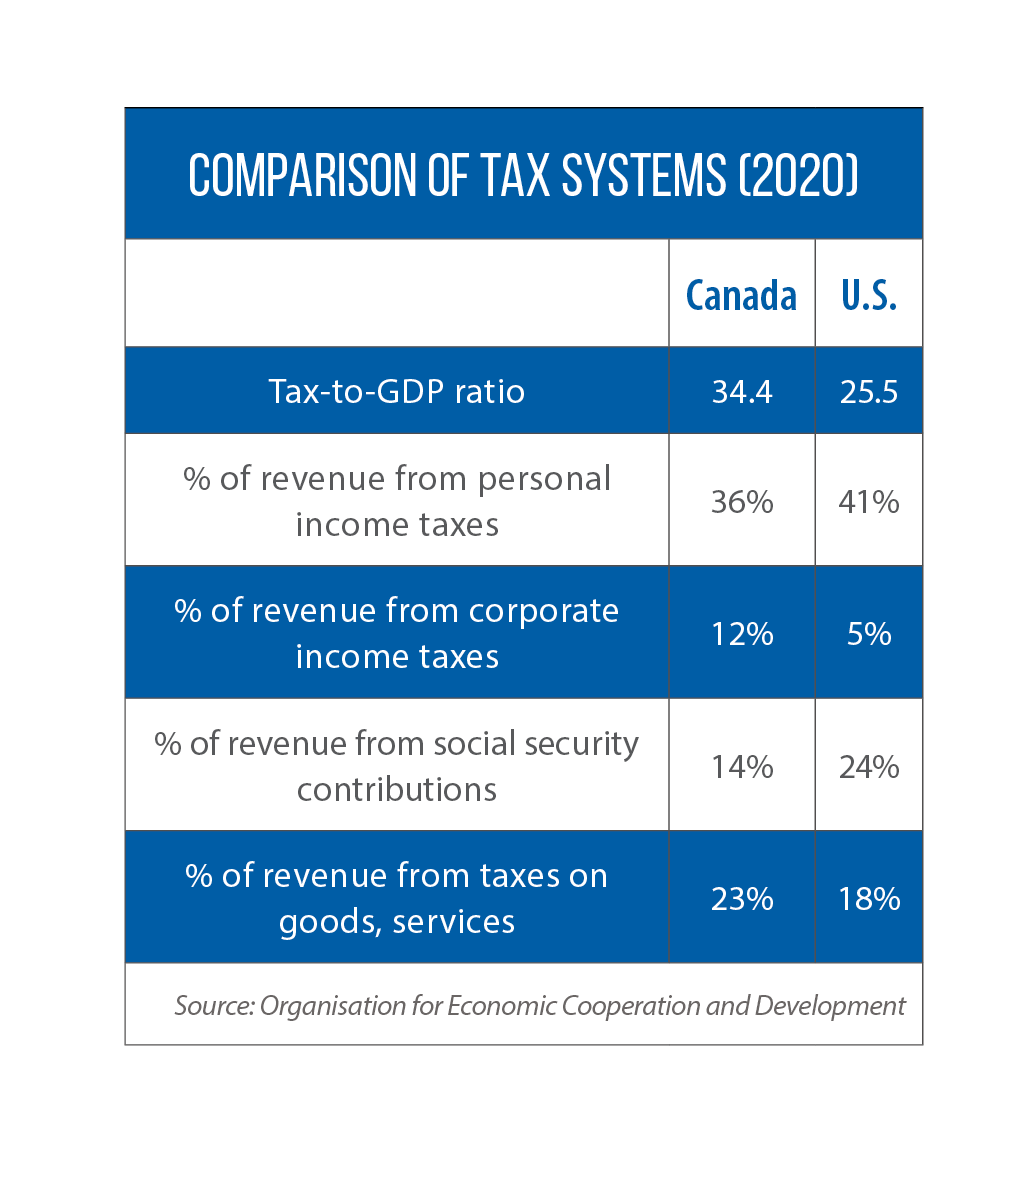 saskatchewan-implements-scaled-back-expansion-of-provincial-sales-tax